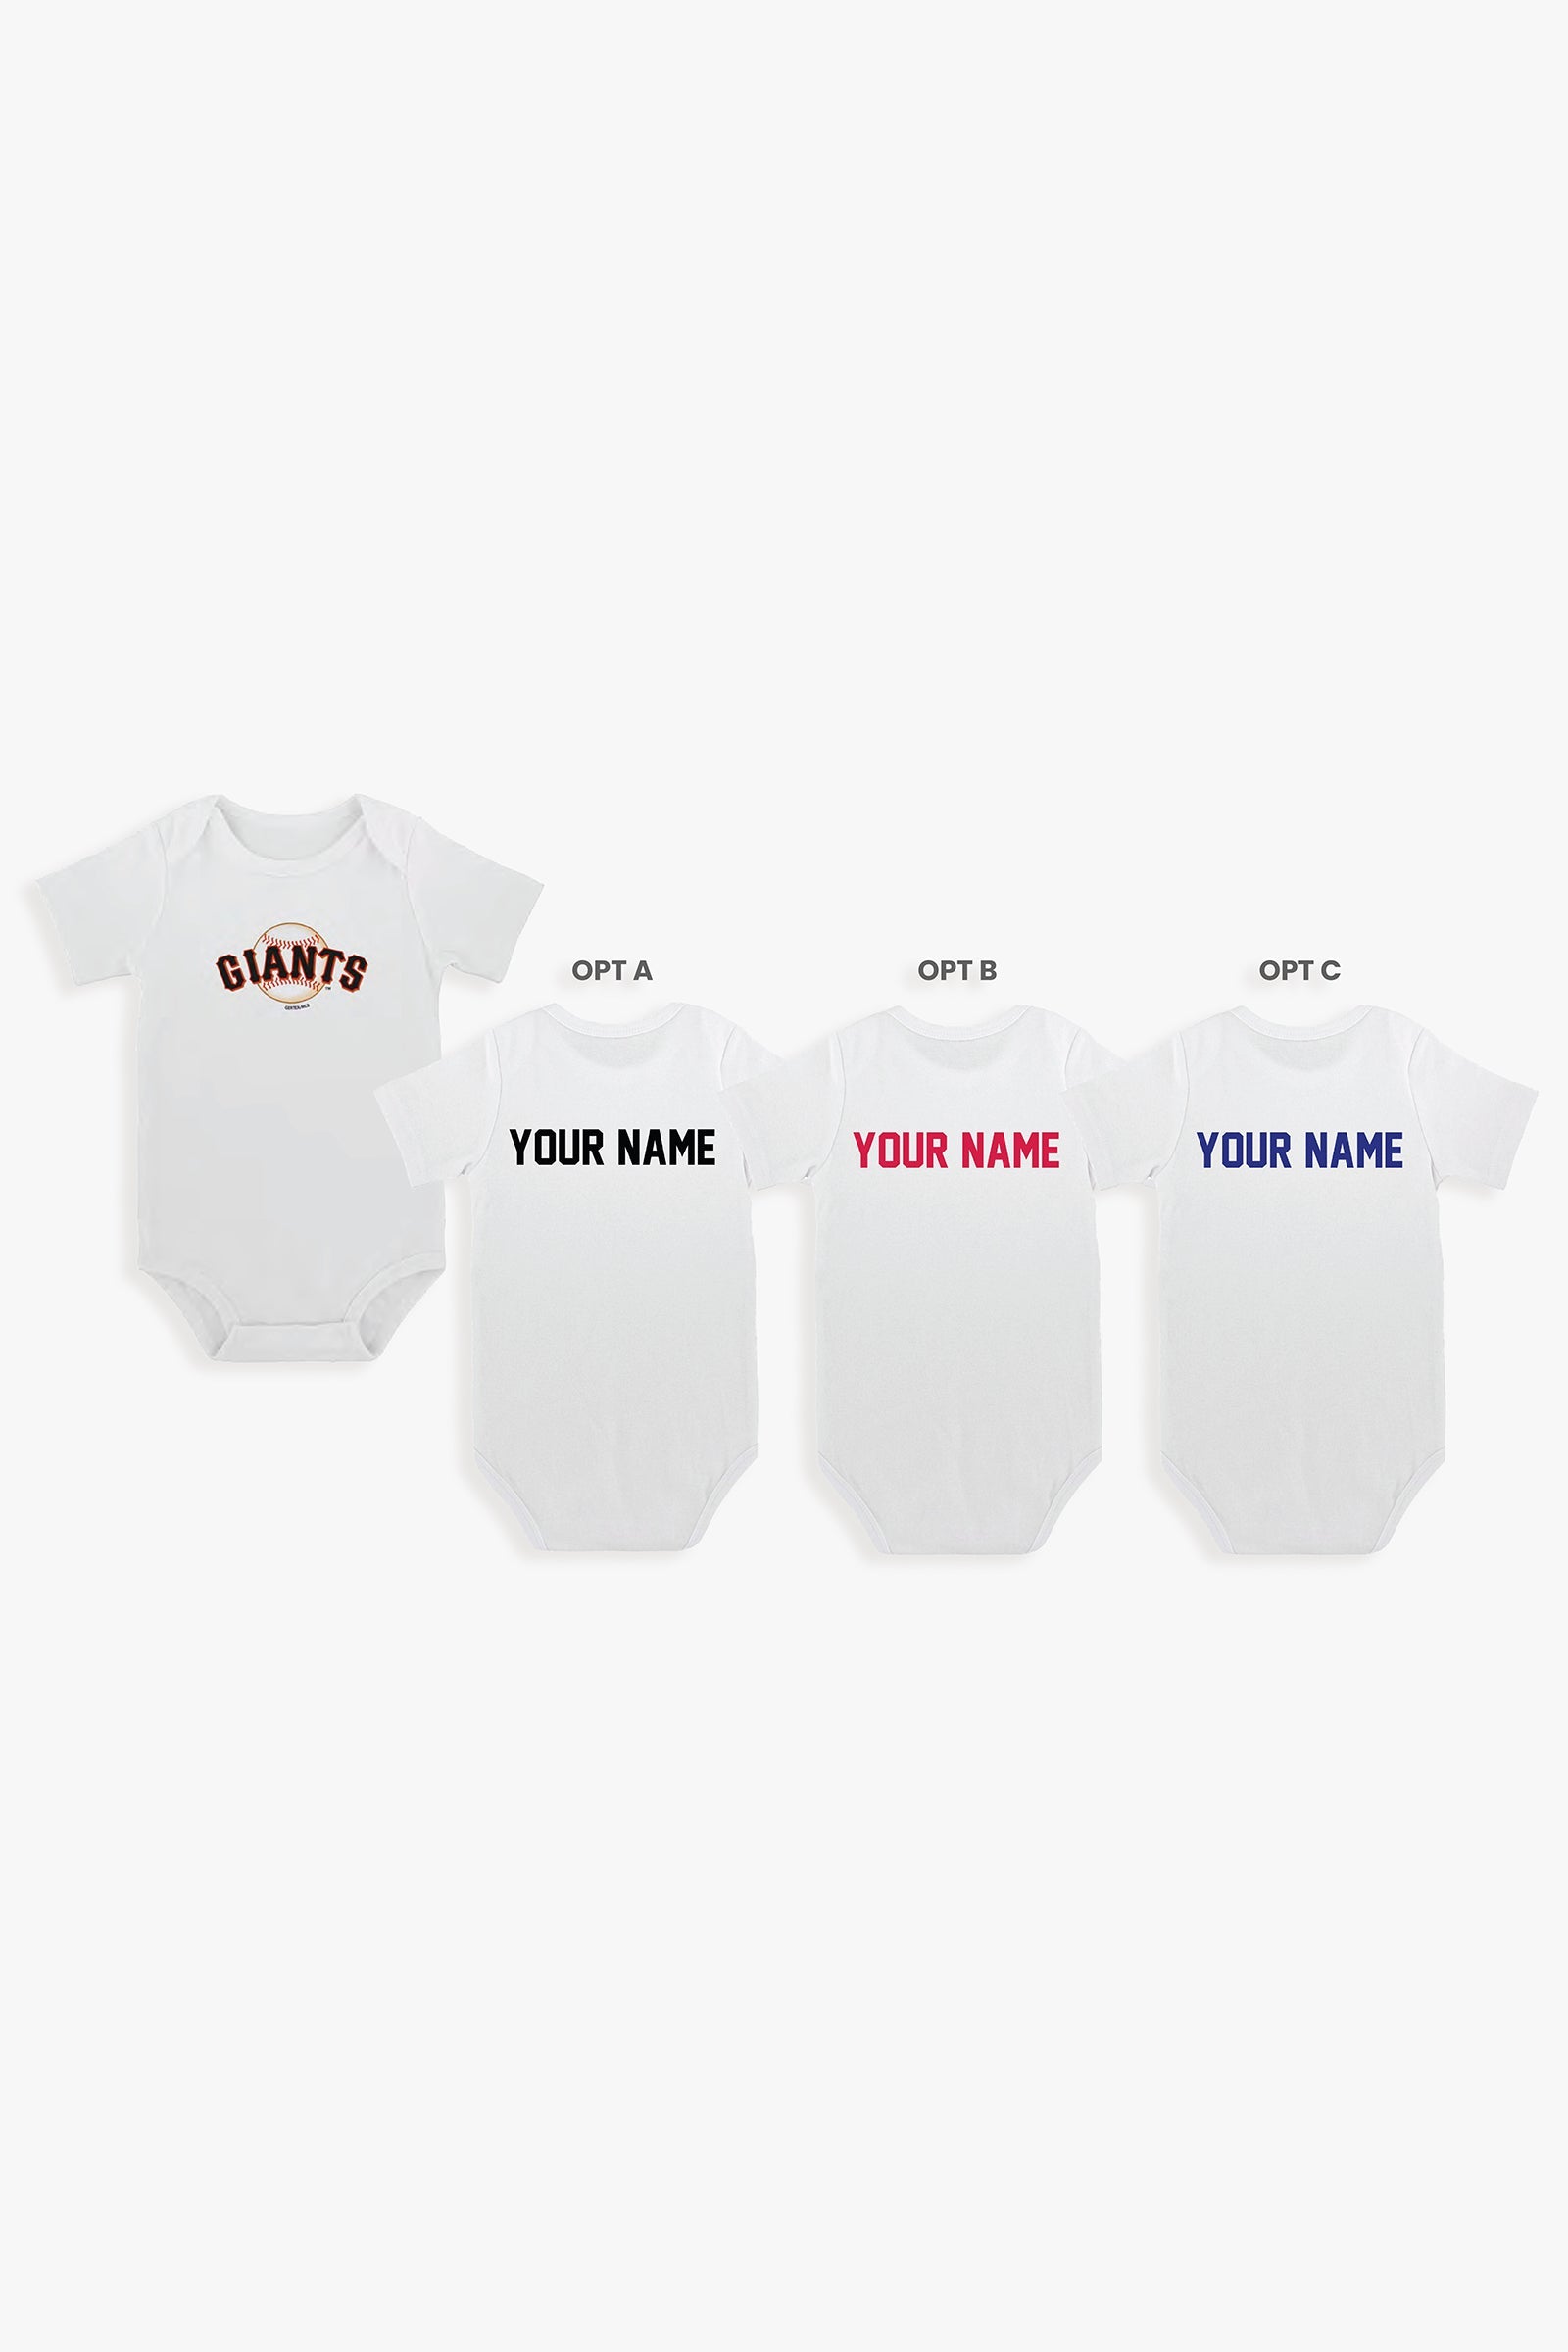 Customizable MLB Baby Bodysuit in White (18-24 Months)